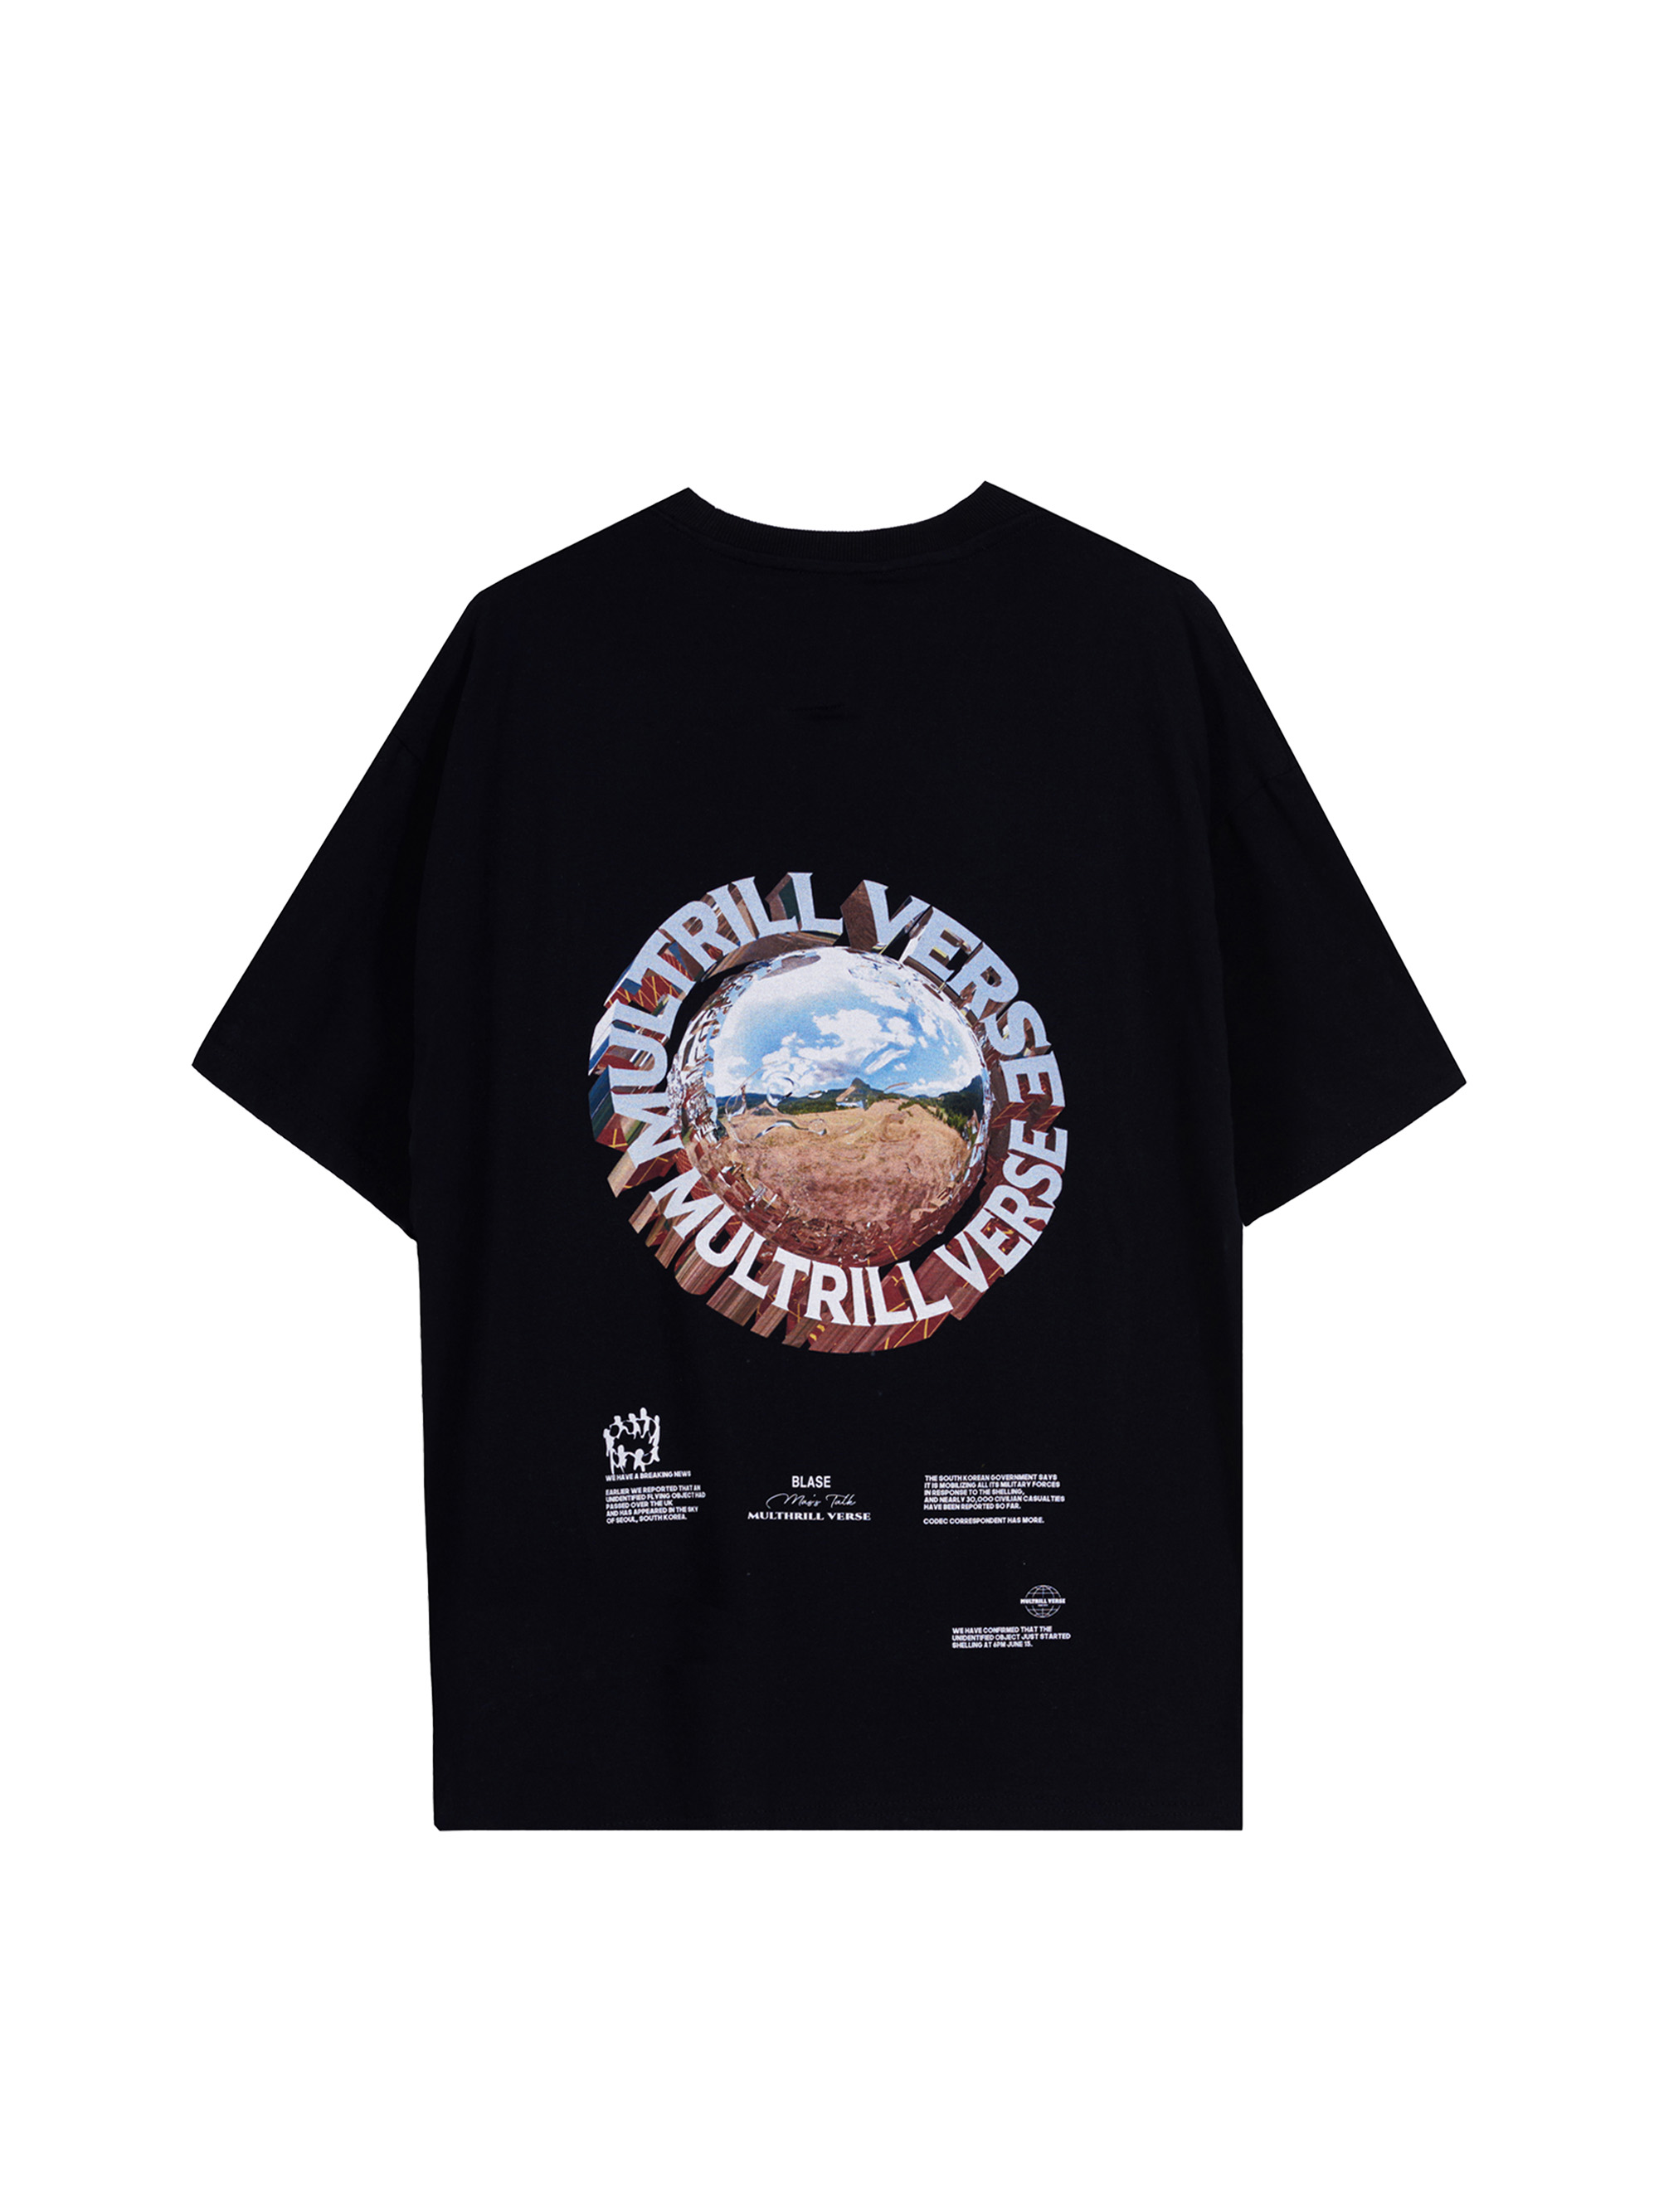 Multrill Verse T-shirt (BLACK)